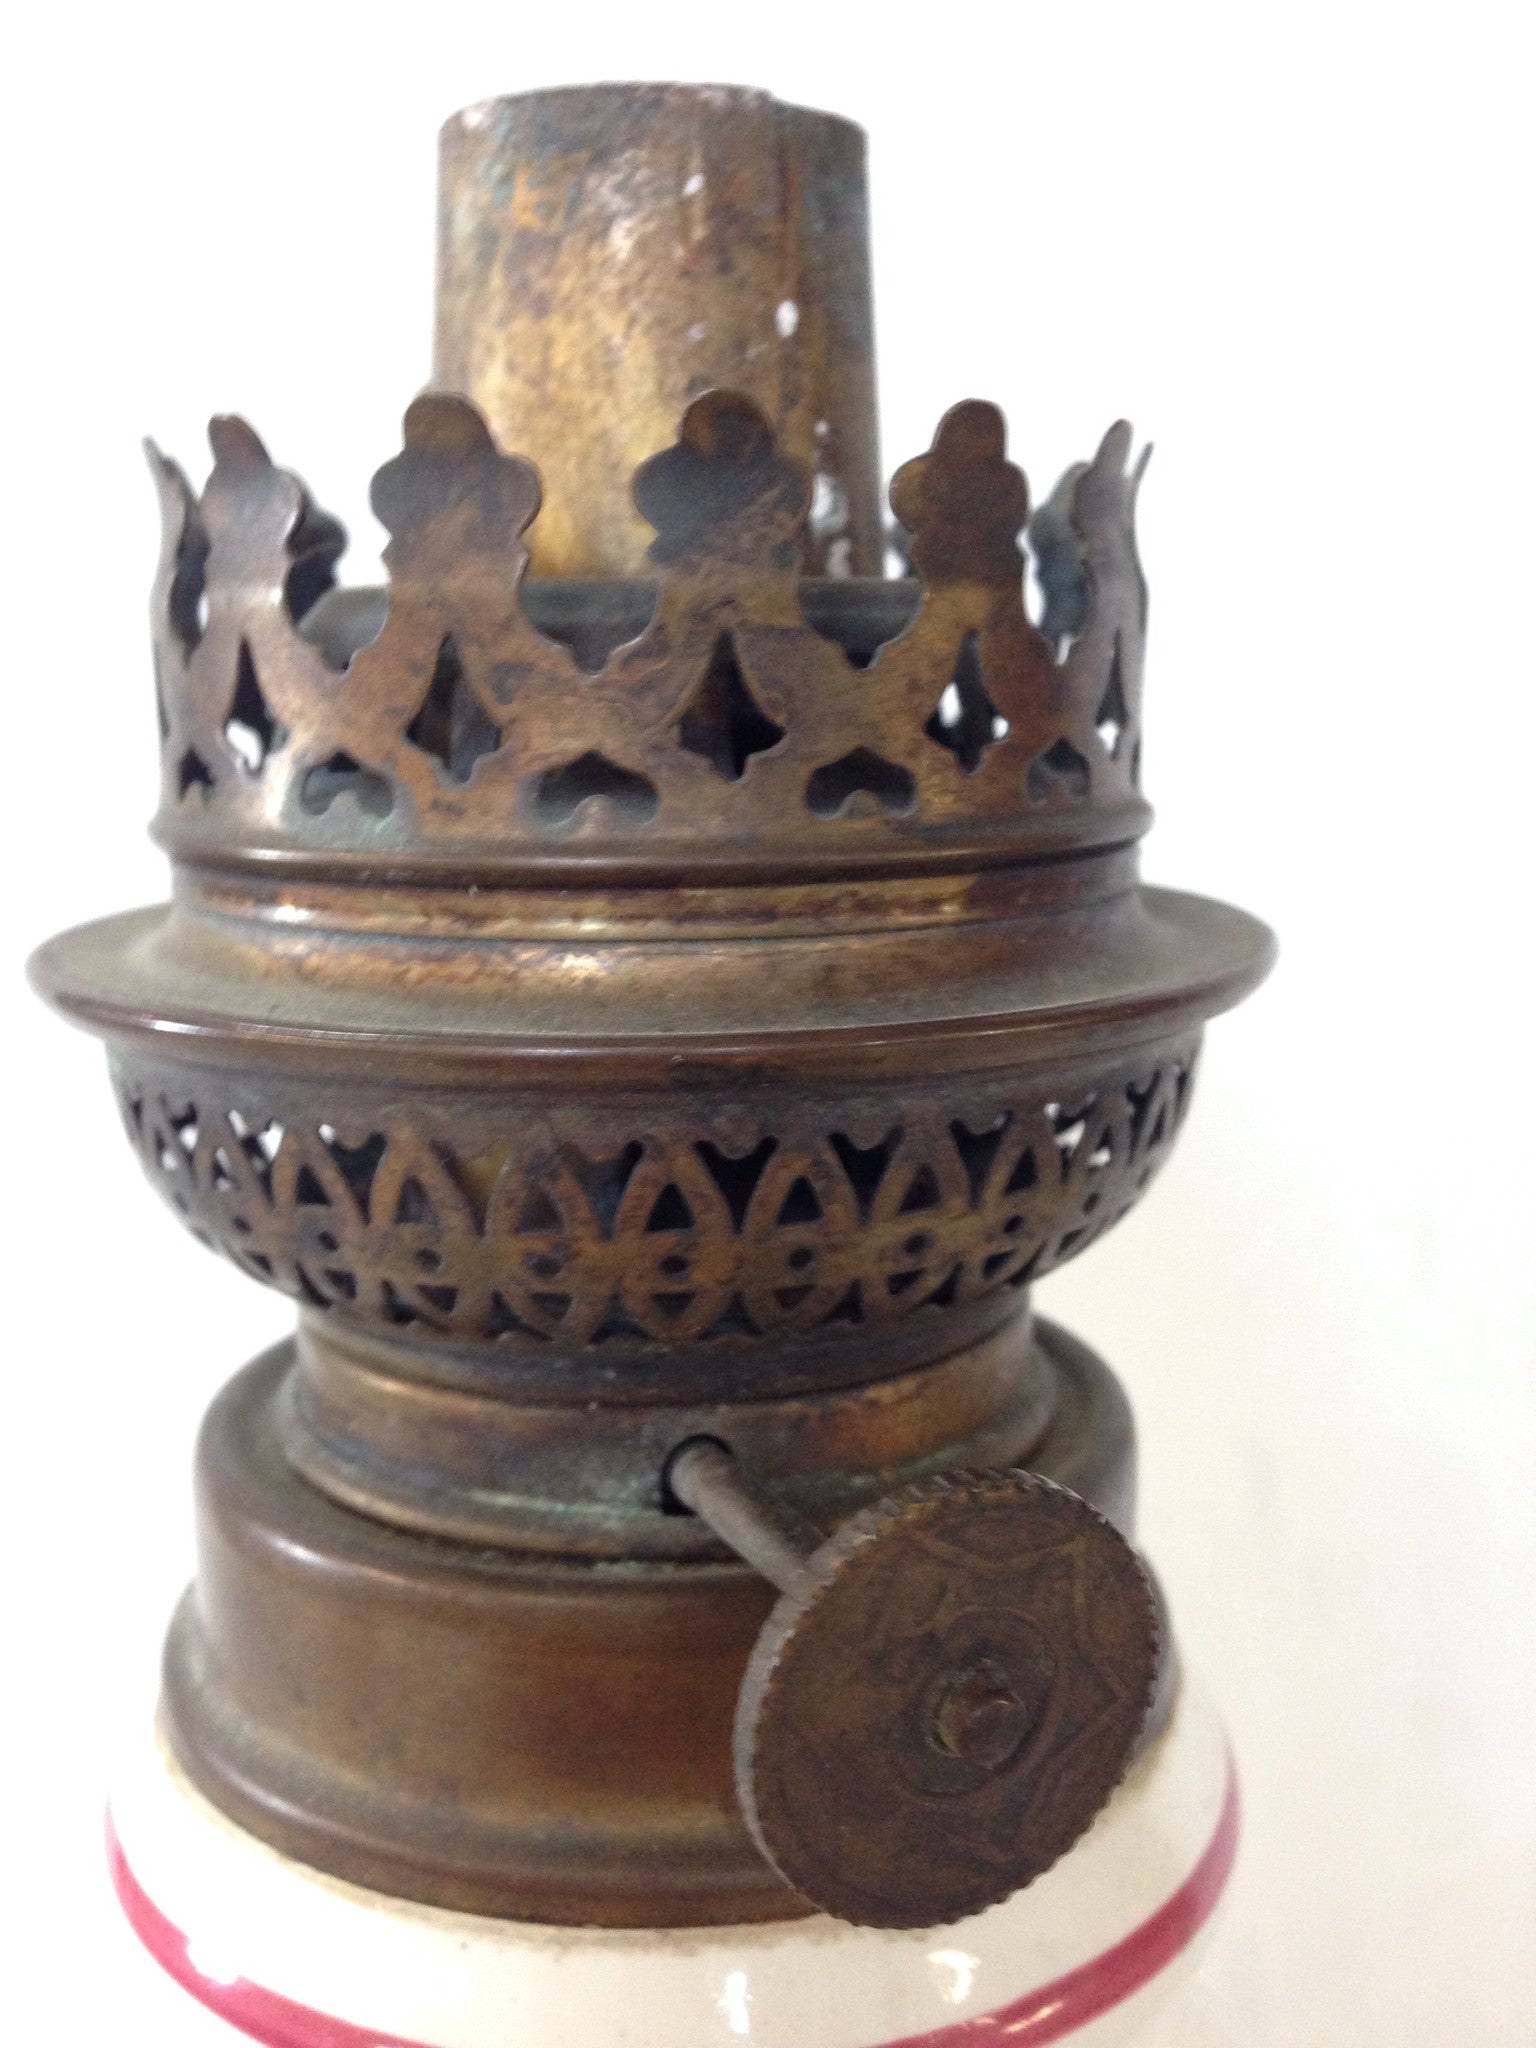 1900's ceramic oil lamp